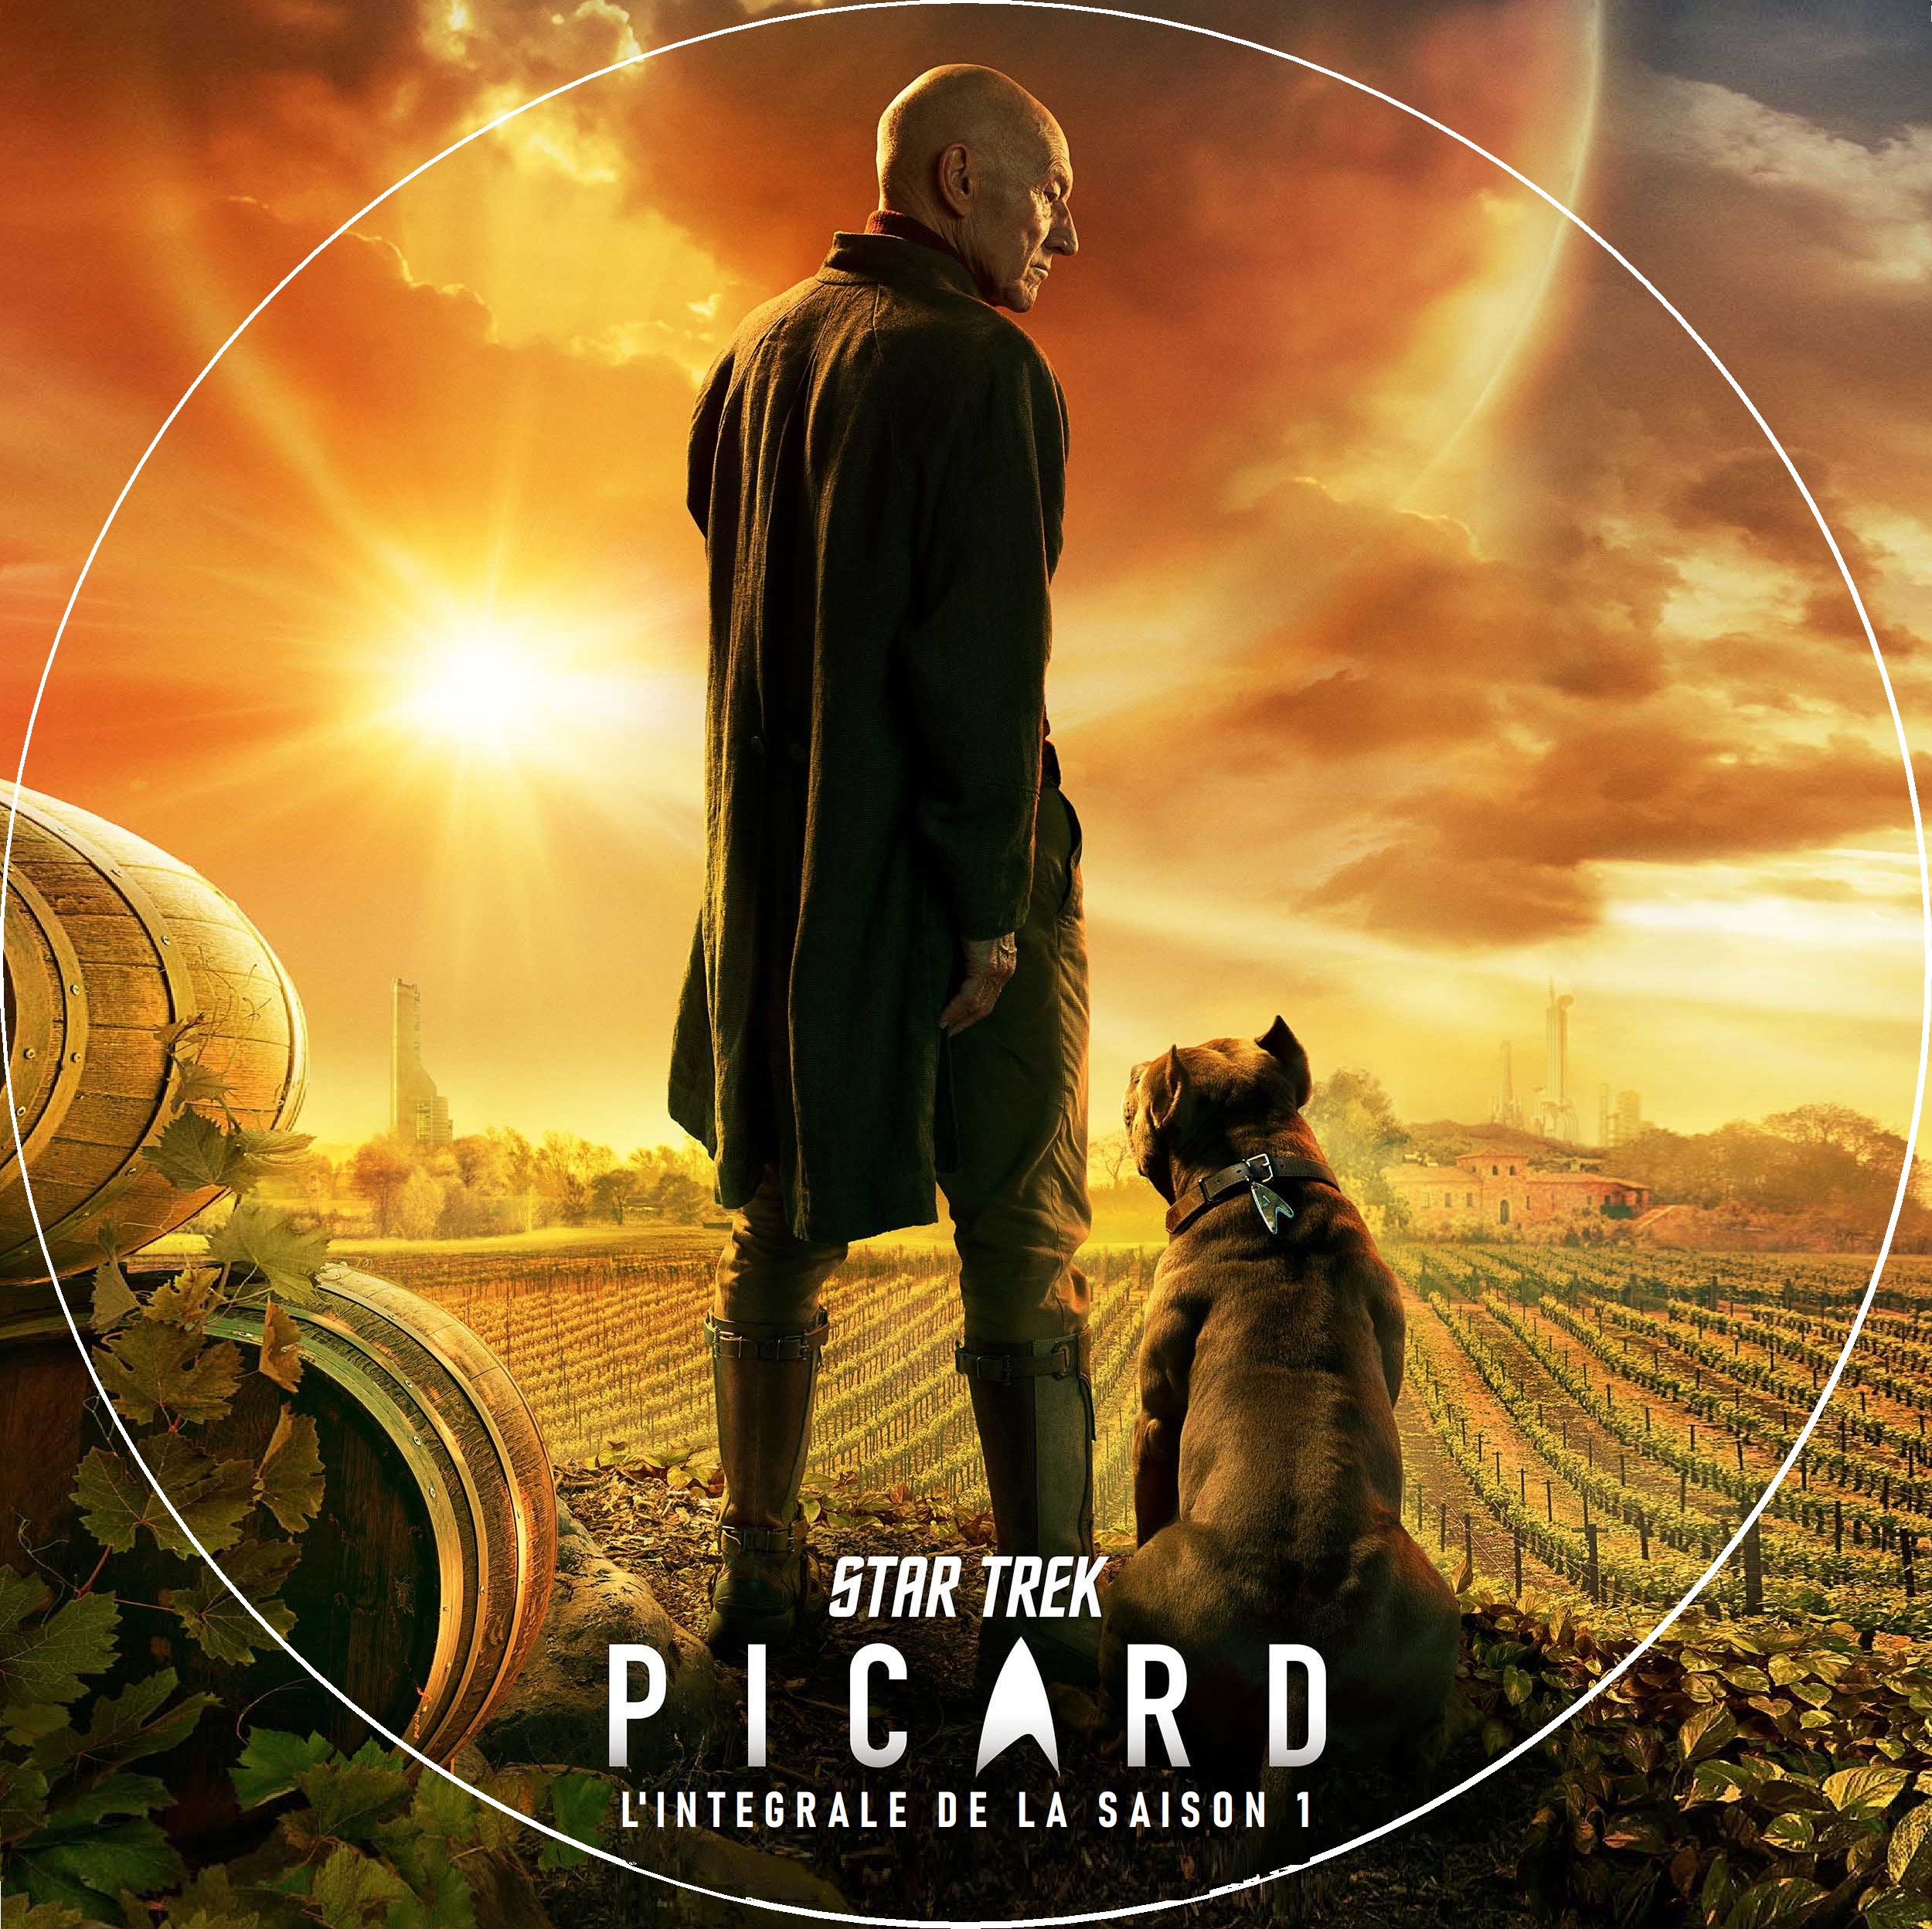 Star Trek Picard saison 1 custom